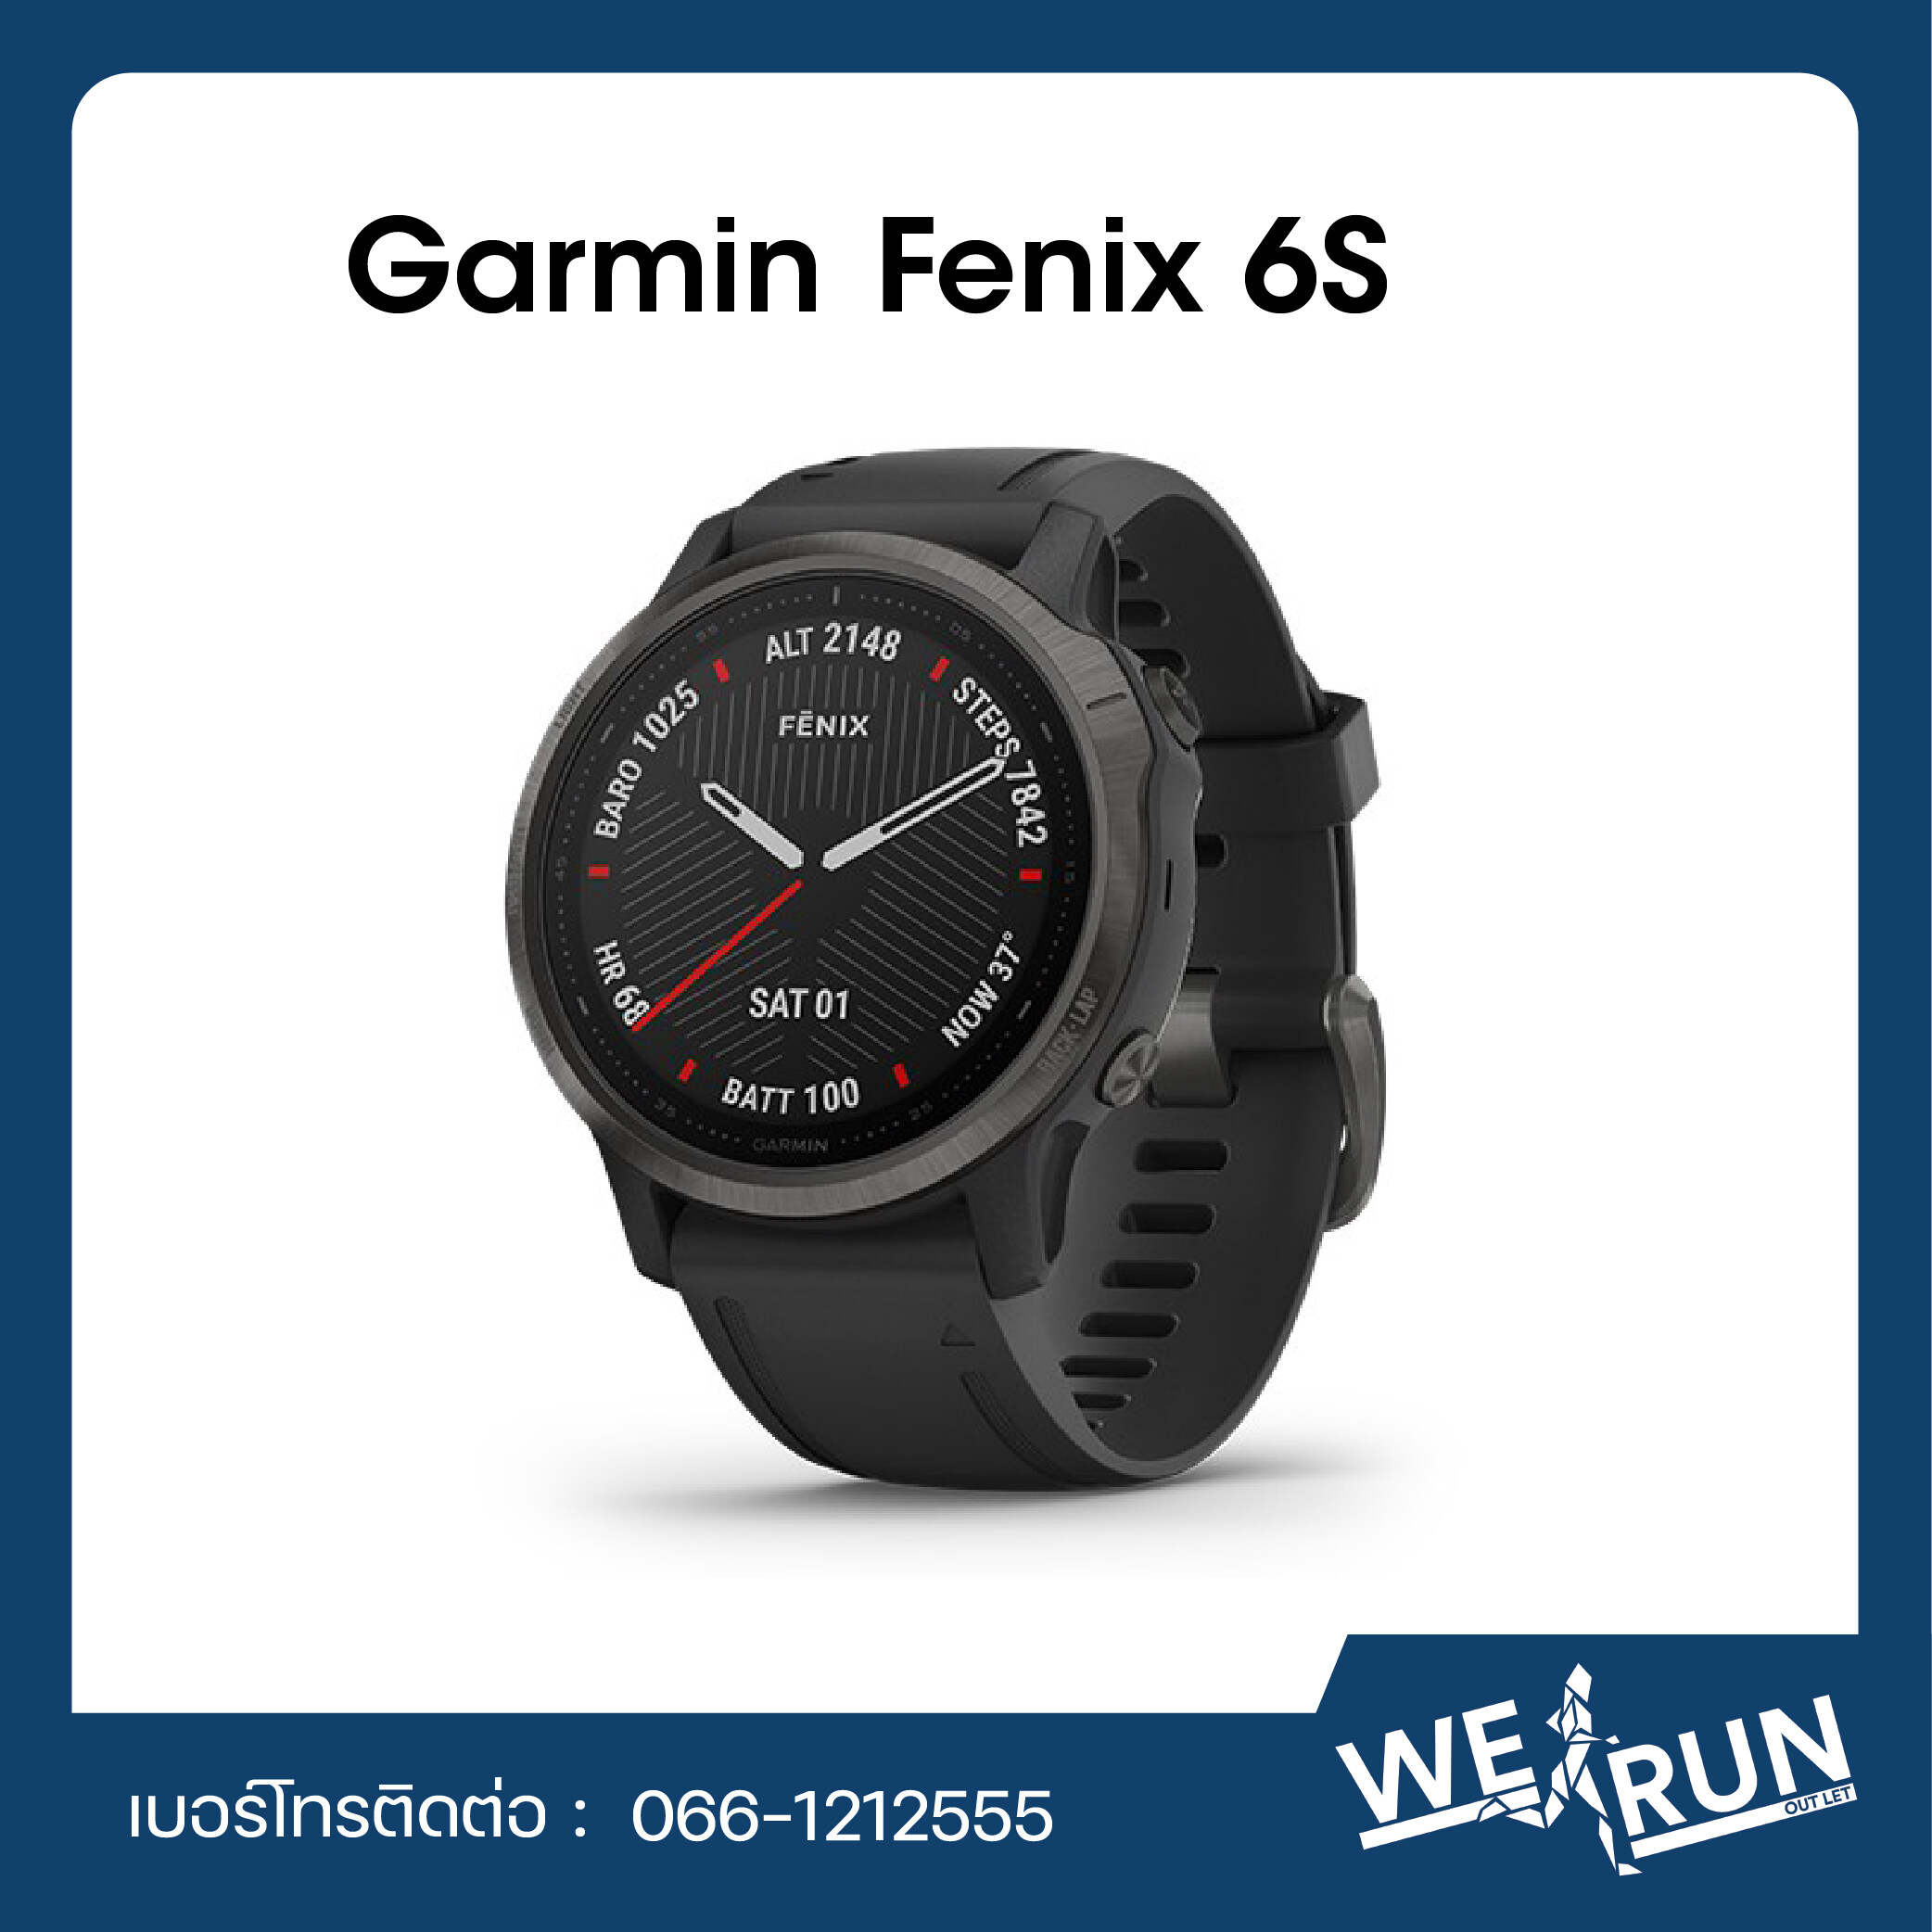 Garmin Fenix 6S Sapphire Black ประกันศูนย์ไทย 12 เดือน เครื่องศูนย์ไทย เมนูไทย By WeRunOutlet - GP02